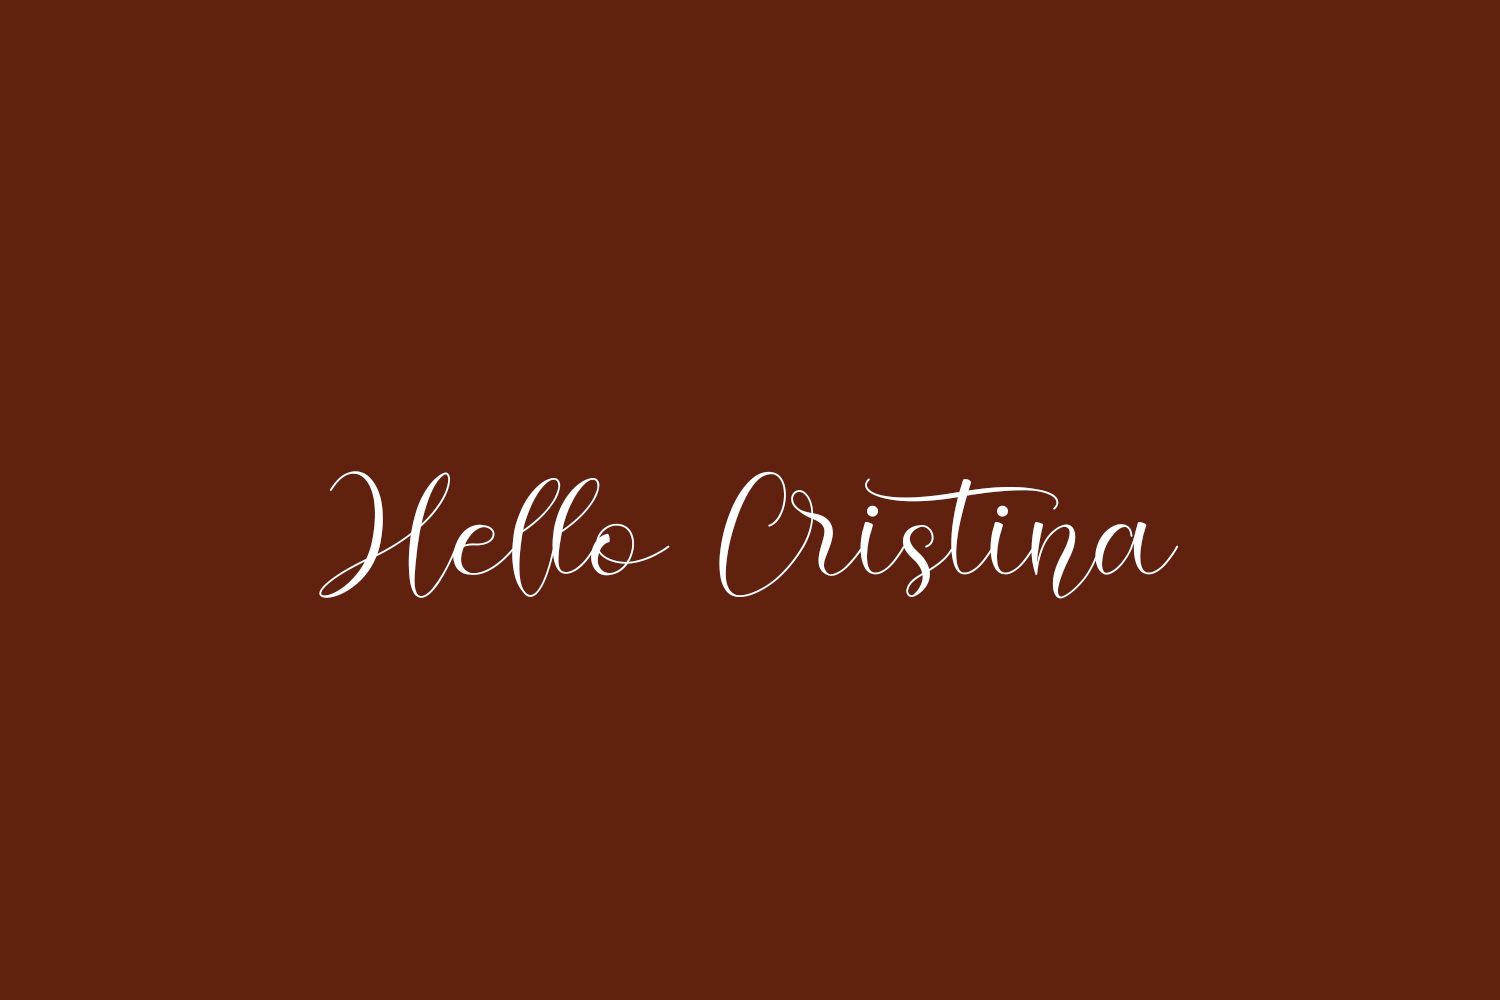 Hello Cristina Free Font